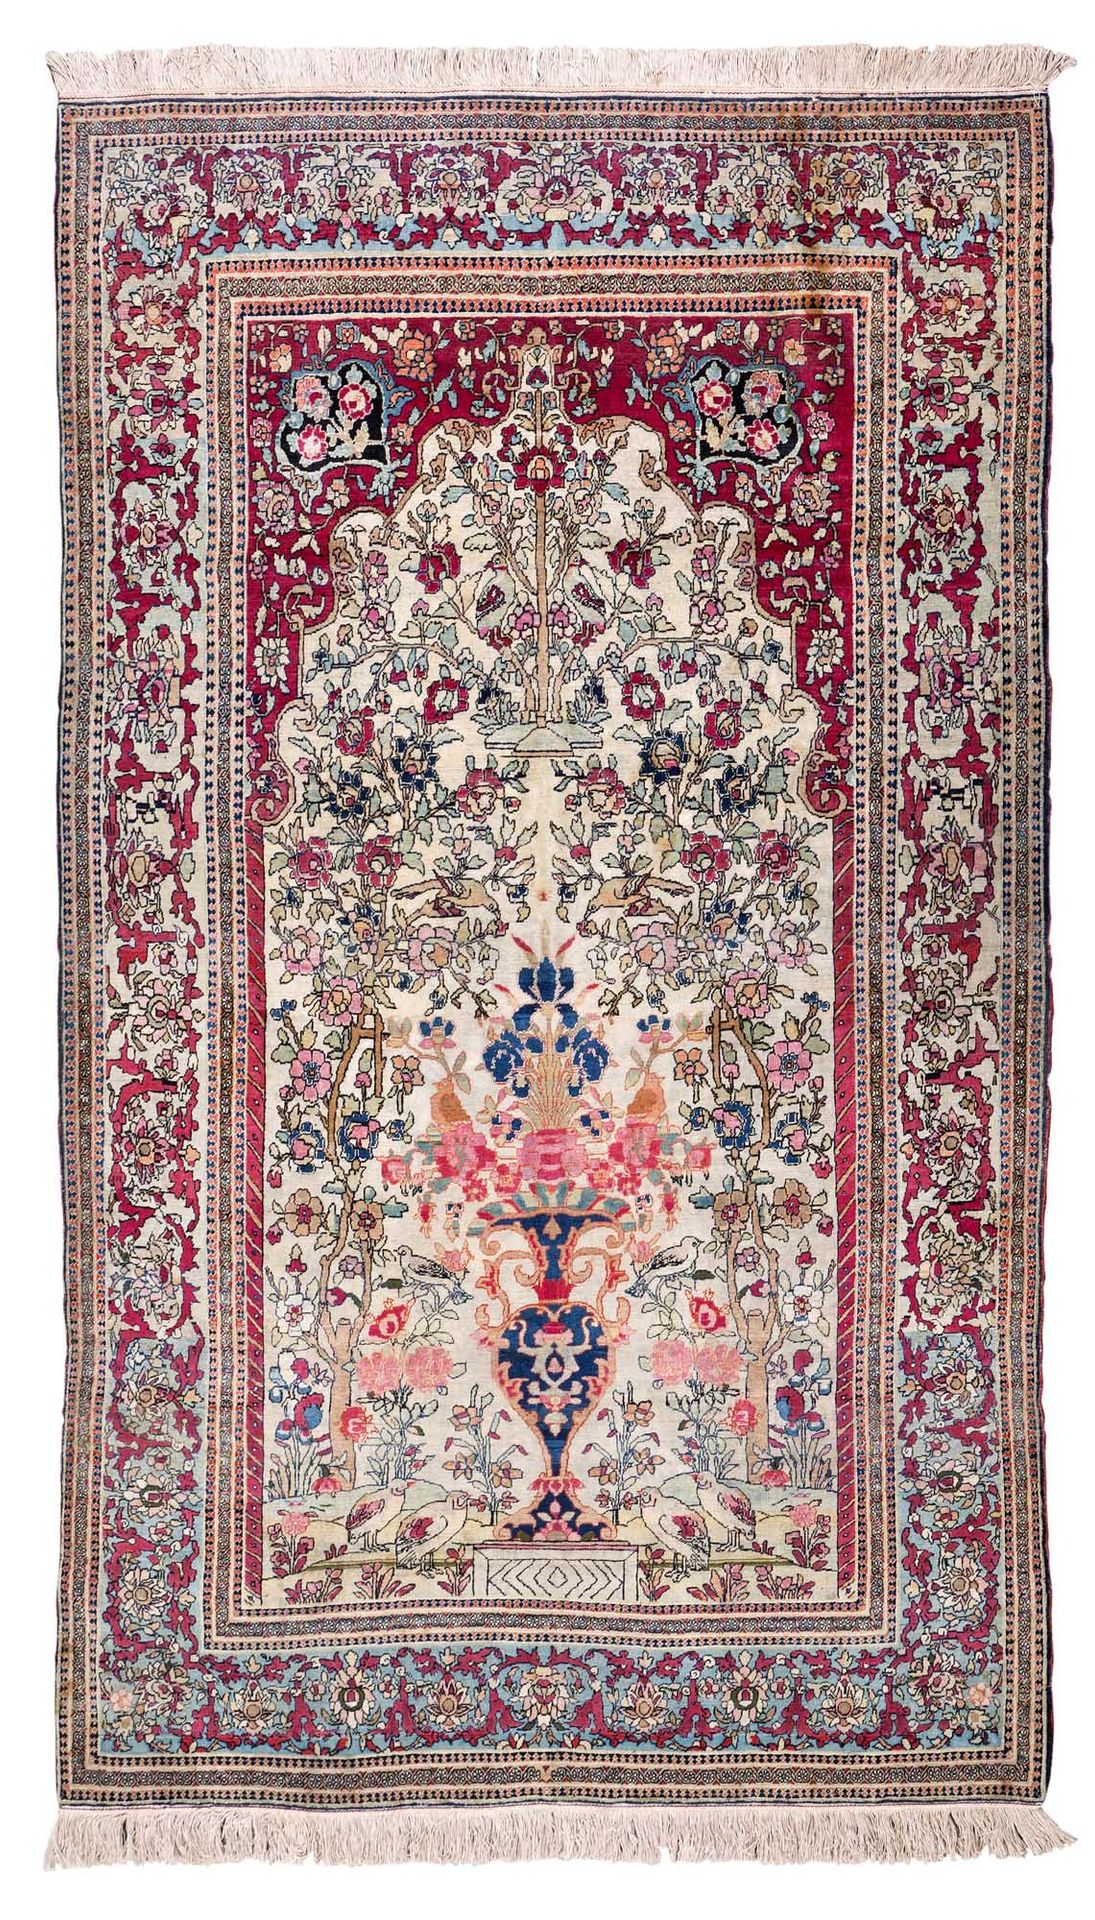 Null ISPAHAN carpet (Persia), late 19th century

Dimensions : 234 x 144cm

Techn&hellip;